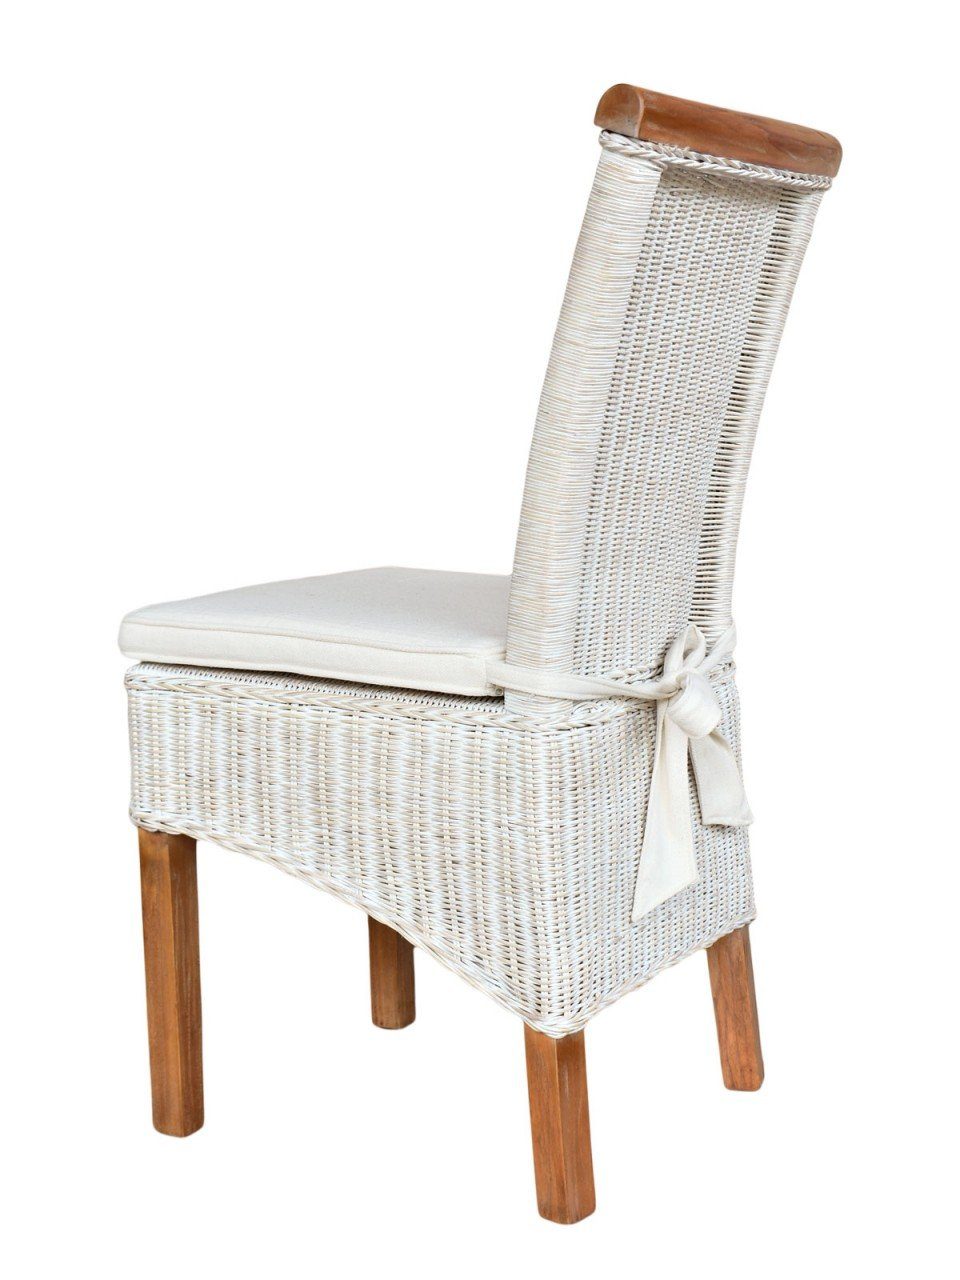 Stück weiß, 6 Stuhl soma Sessel Set Esszimmer-Stühle Sessel Rattanstühle Perth Sitzplatz Sitzkissen, Soma Sitzmöbel